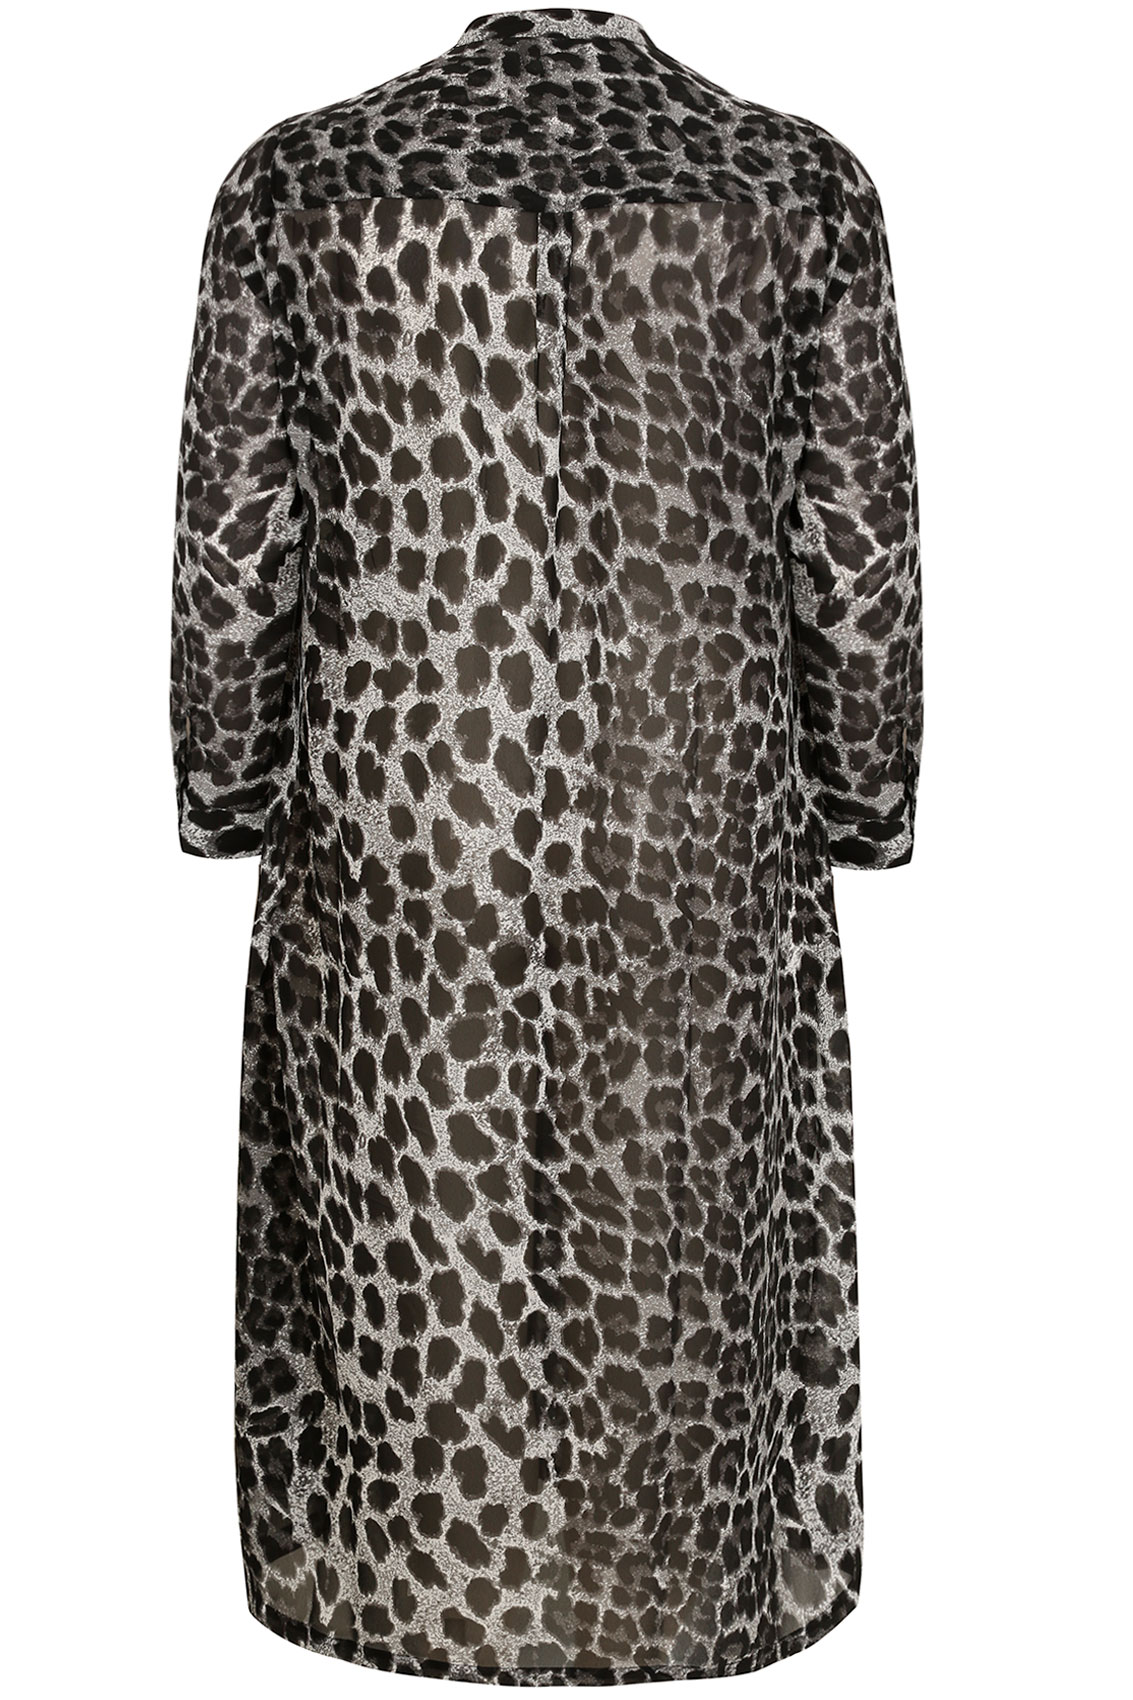 Black & Grey Leopard Print Maxi Shirt With Side Splits, Plus Size 16 to 32